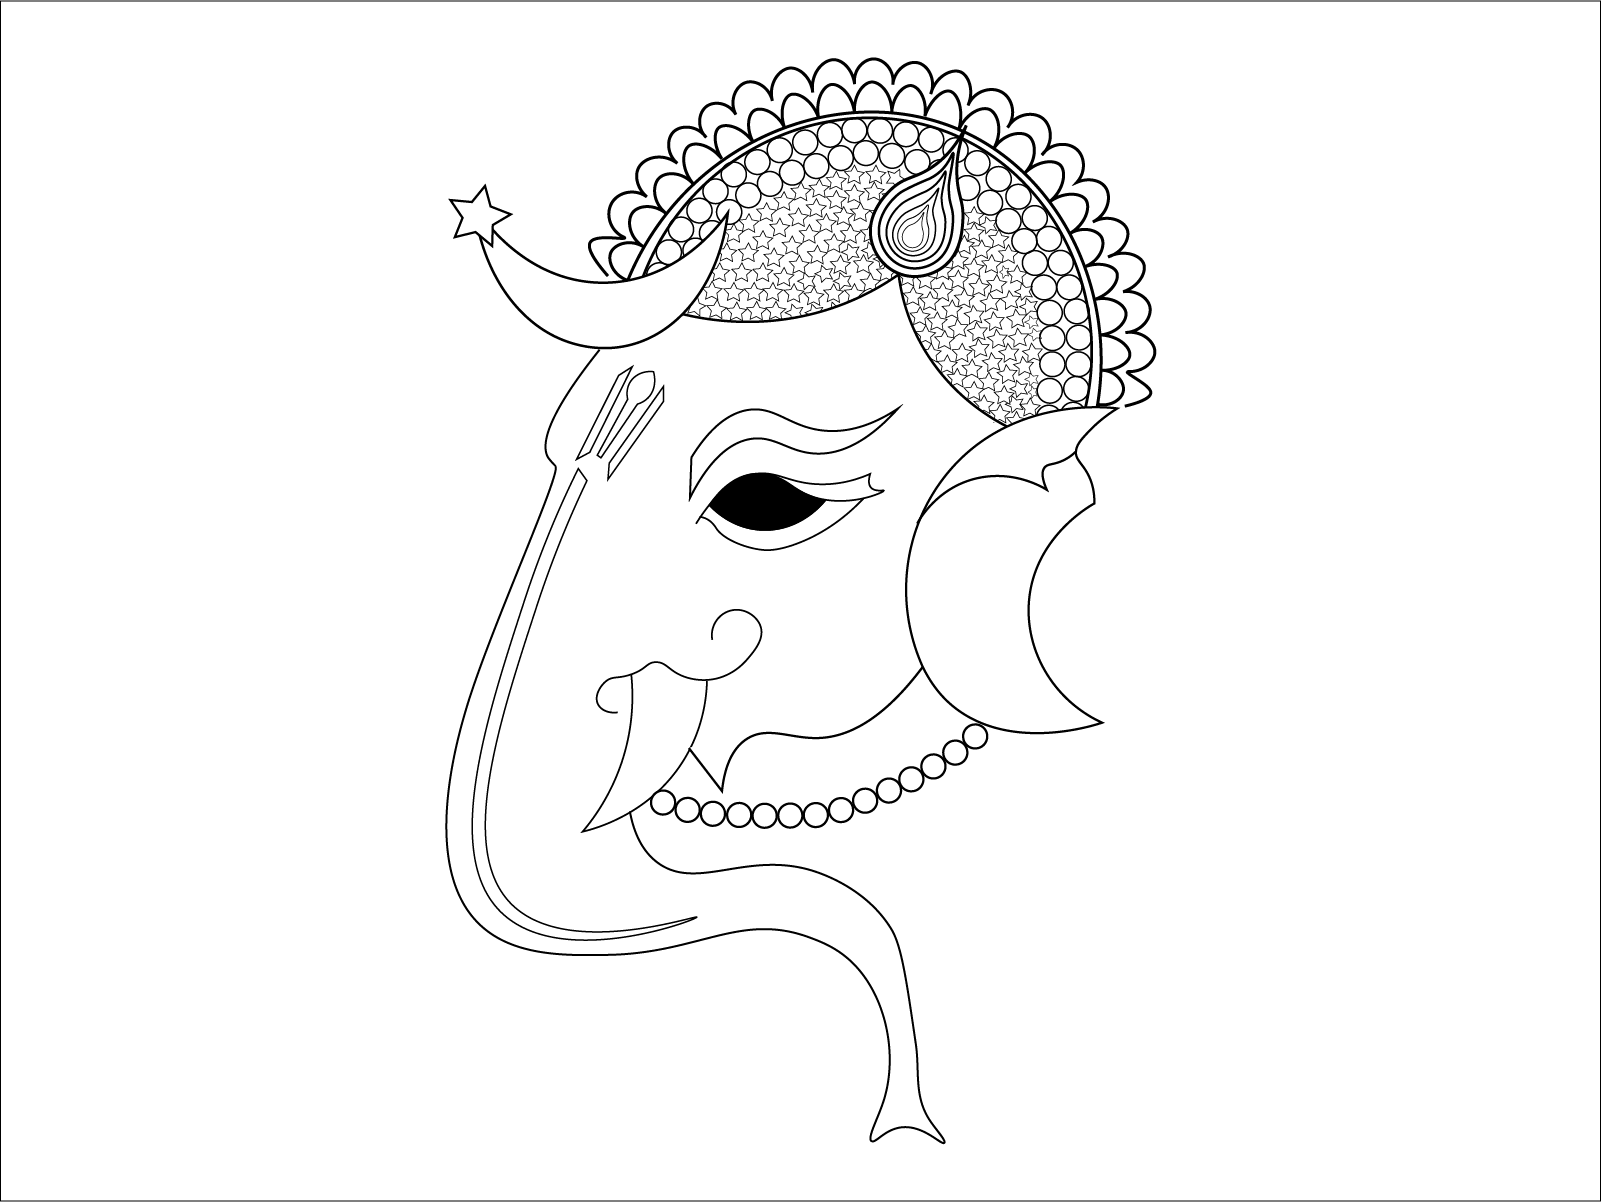 Ganesh Pencil Drawing Online - www.puzzlewood.net 1695025811